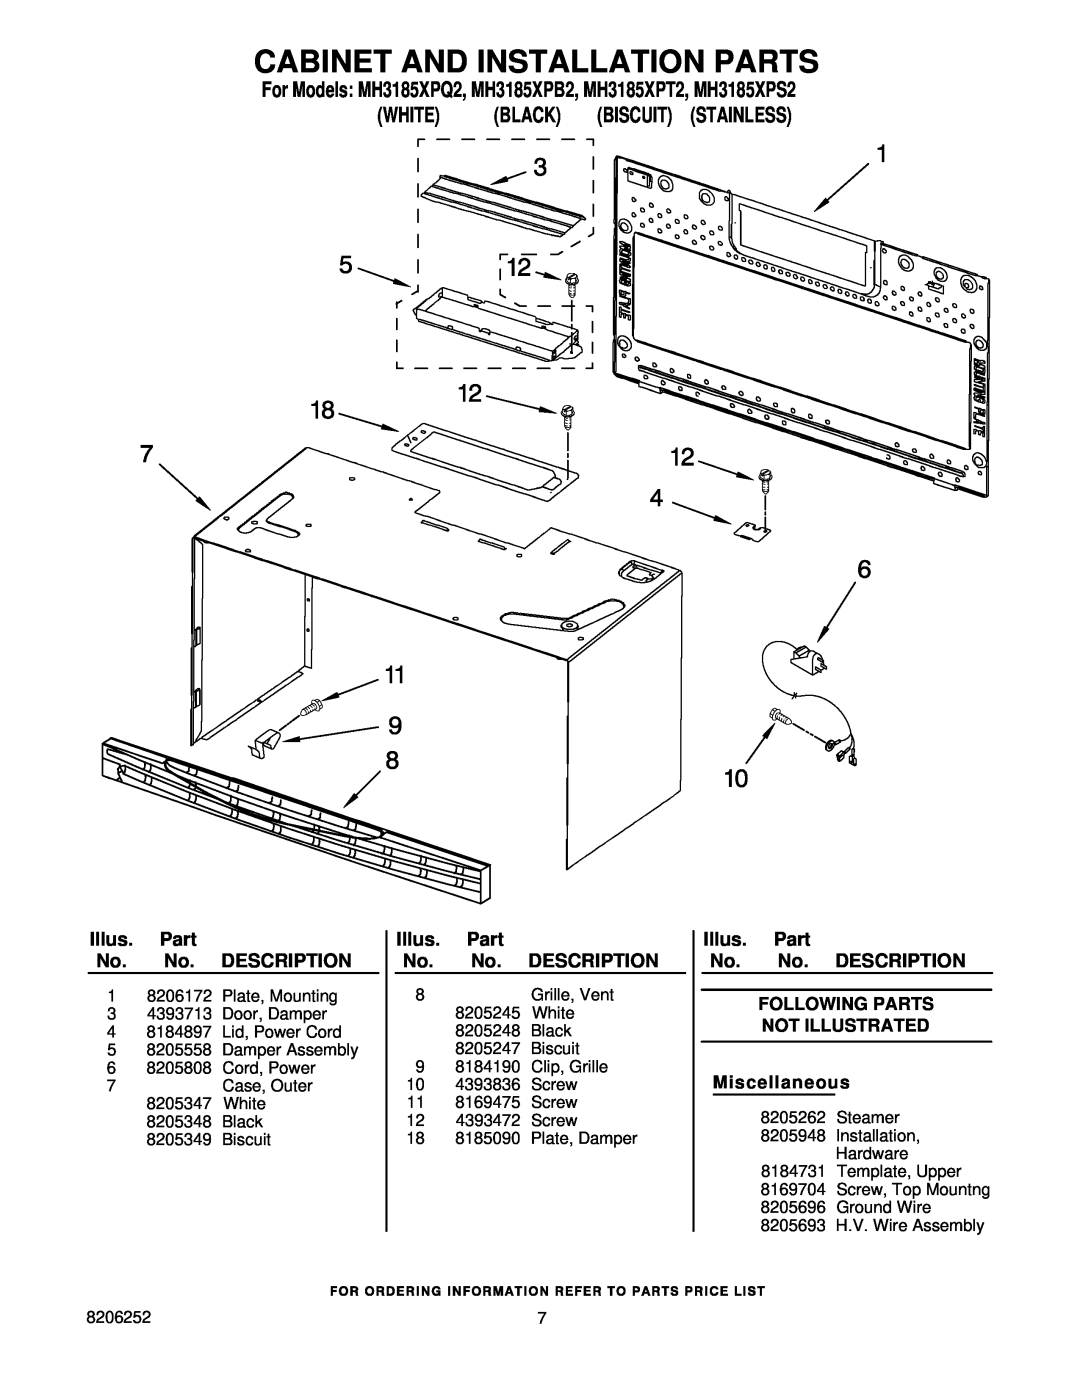 Whirlpool MH3185XPQ2 manual Cabinet And Installation Parts, Illus. Part No. No. DESCRIPTION FOLLOWING PARTS, White, Black 